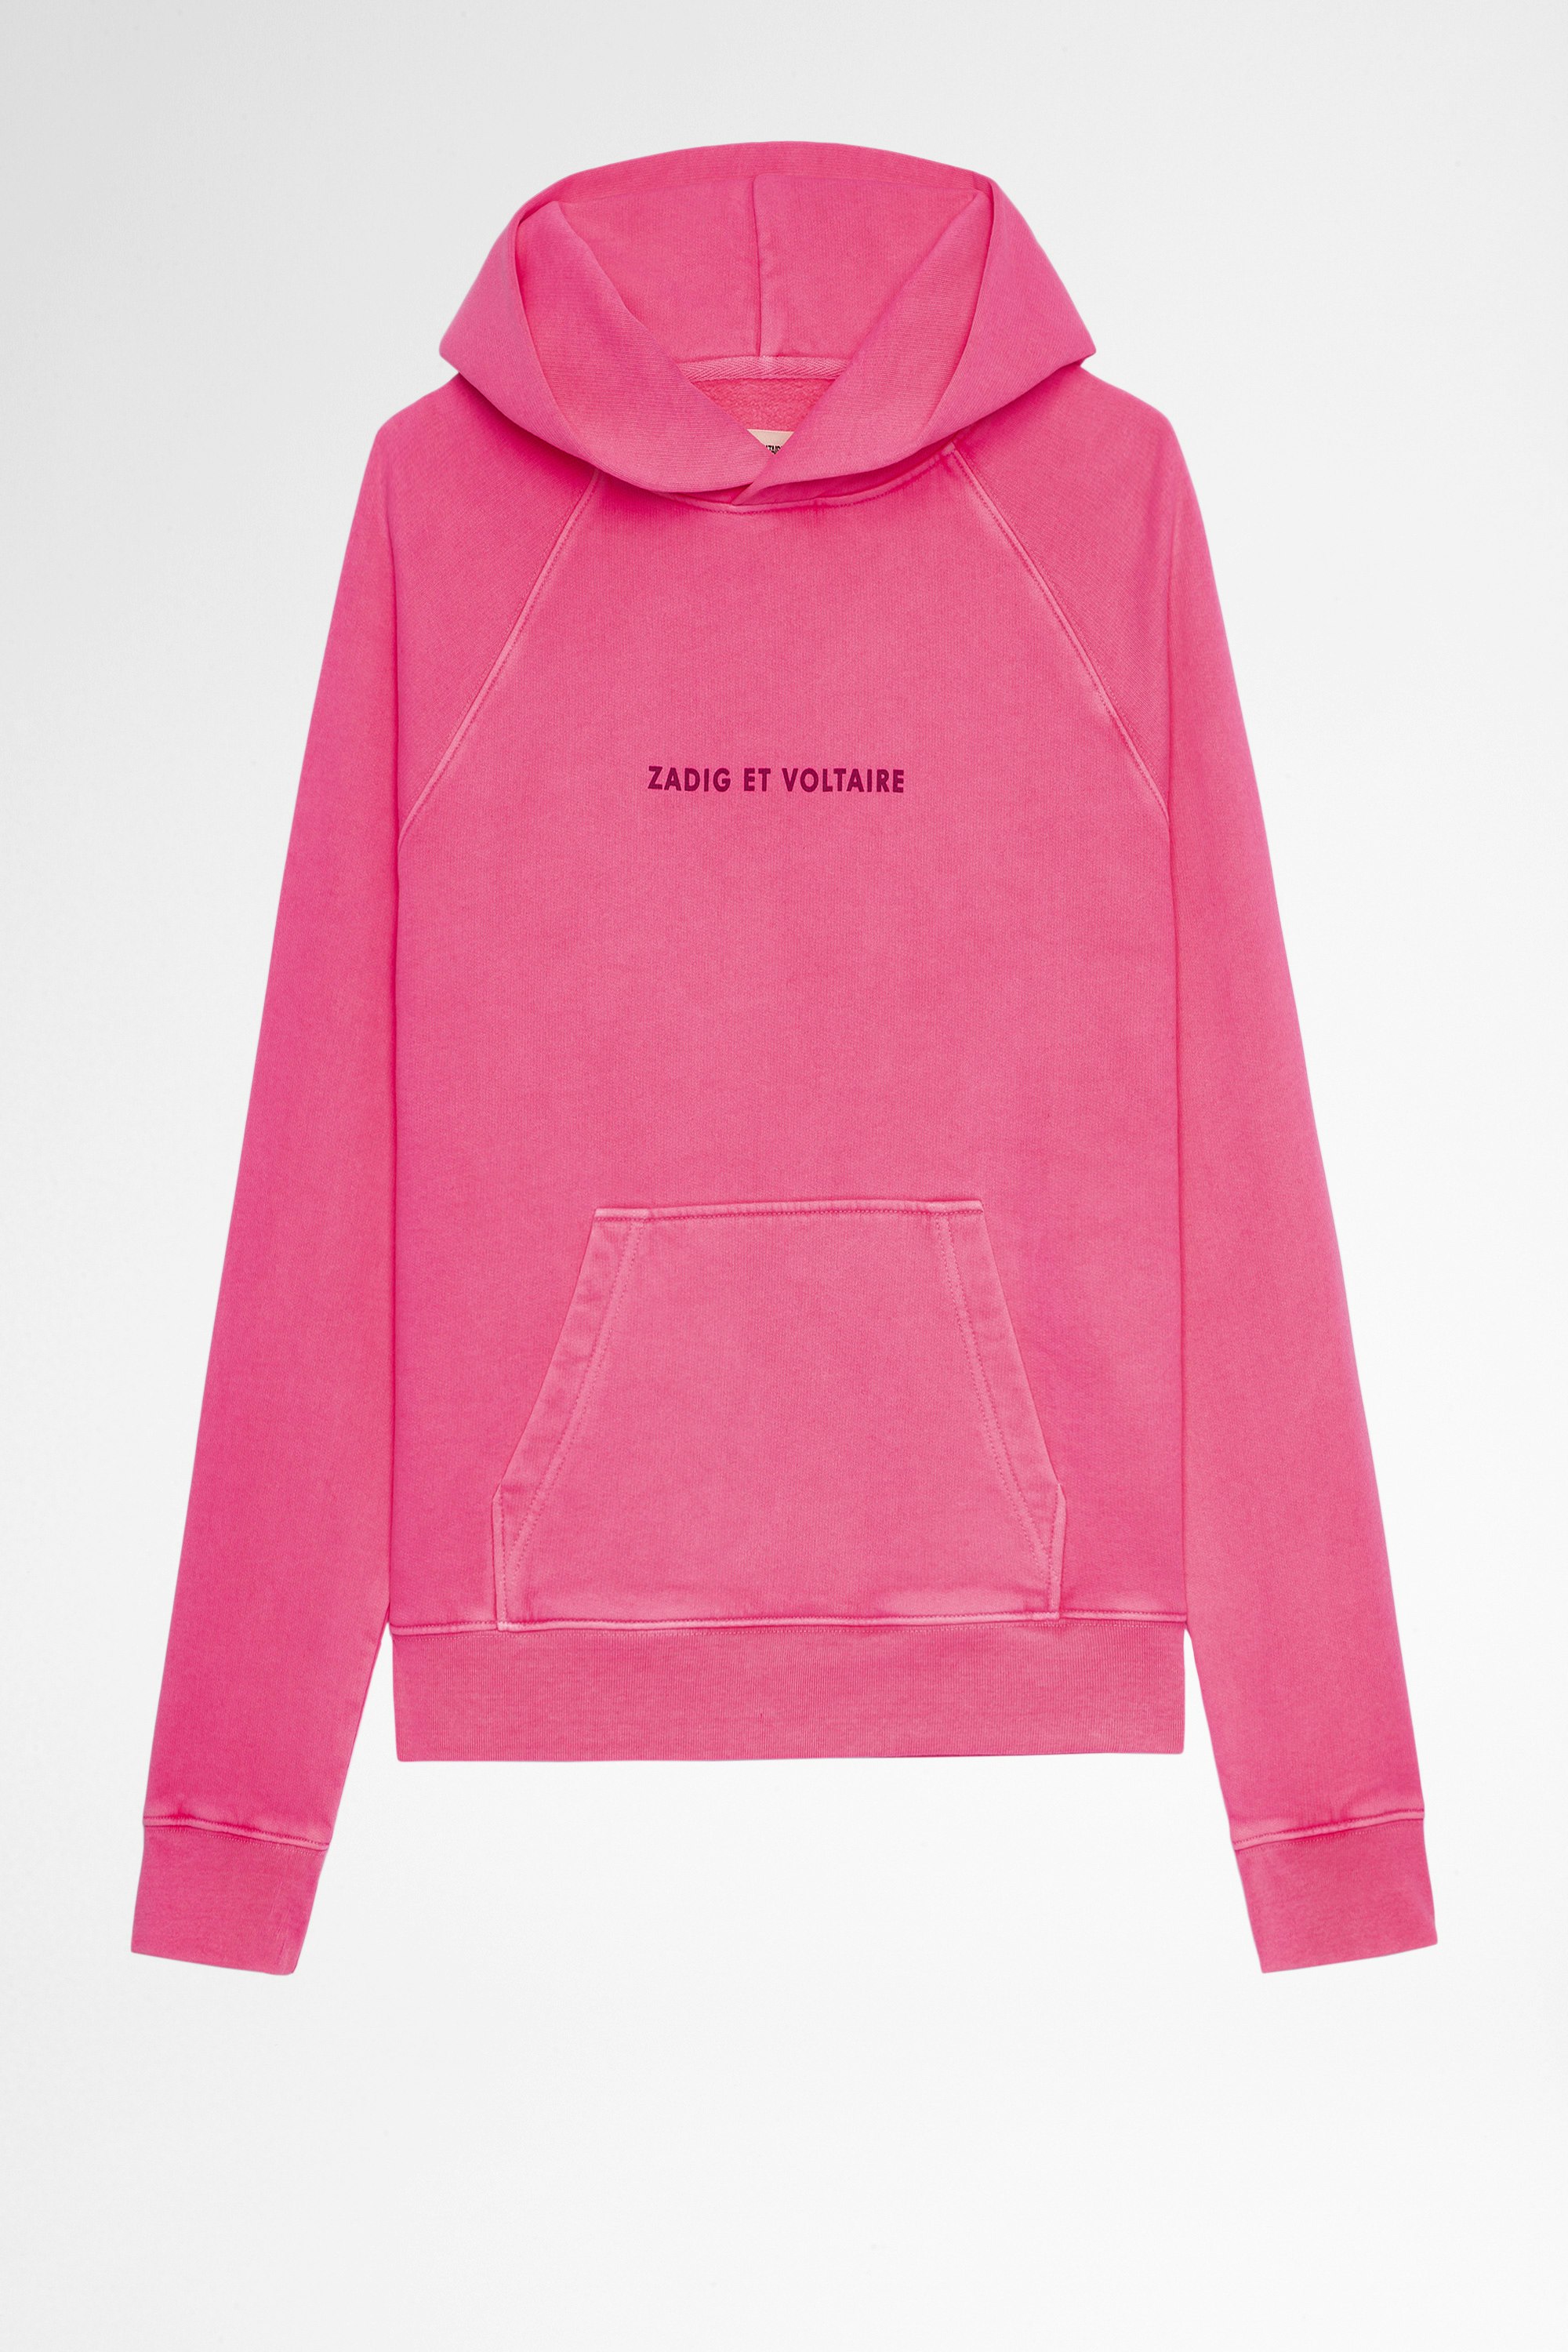 Georgy Happy Sweatshirt Women’s pink cotton hoodie. Made with fibers from organic farming.